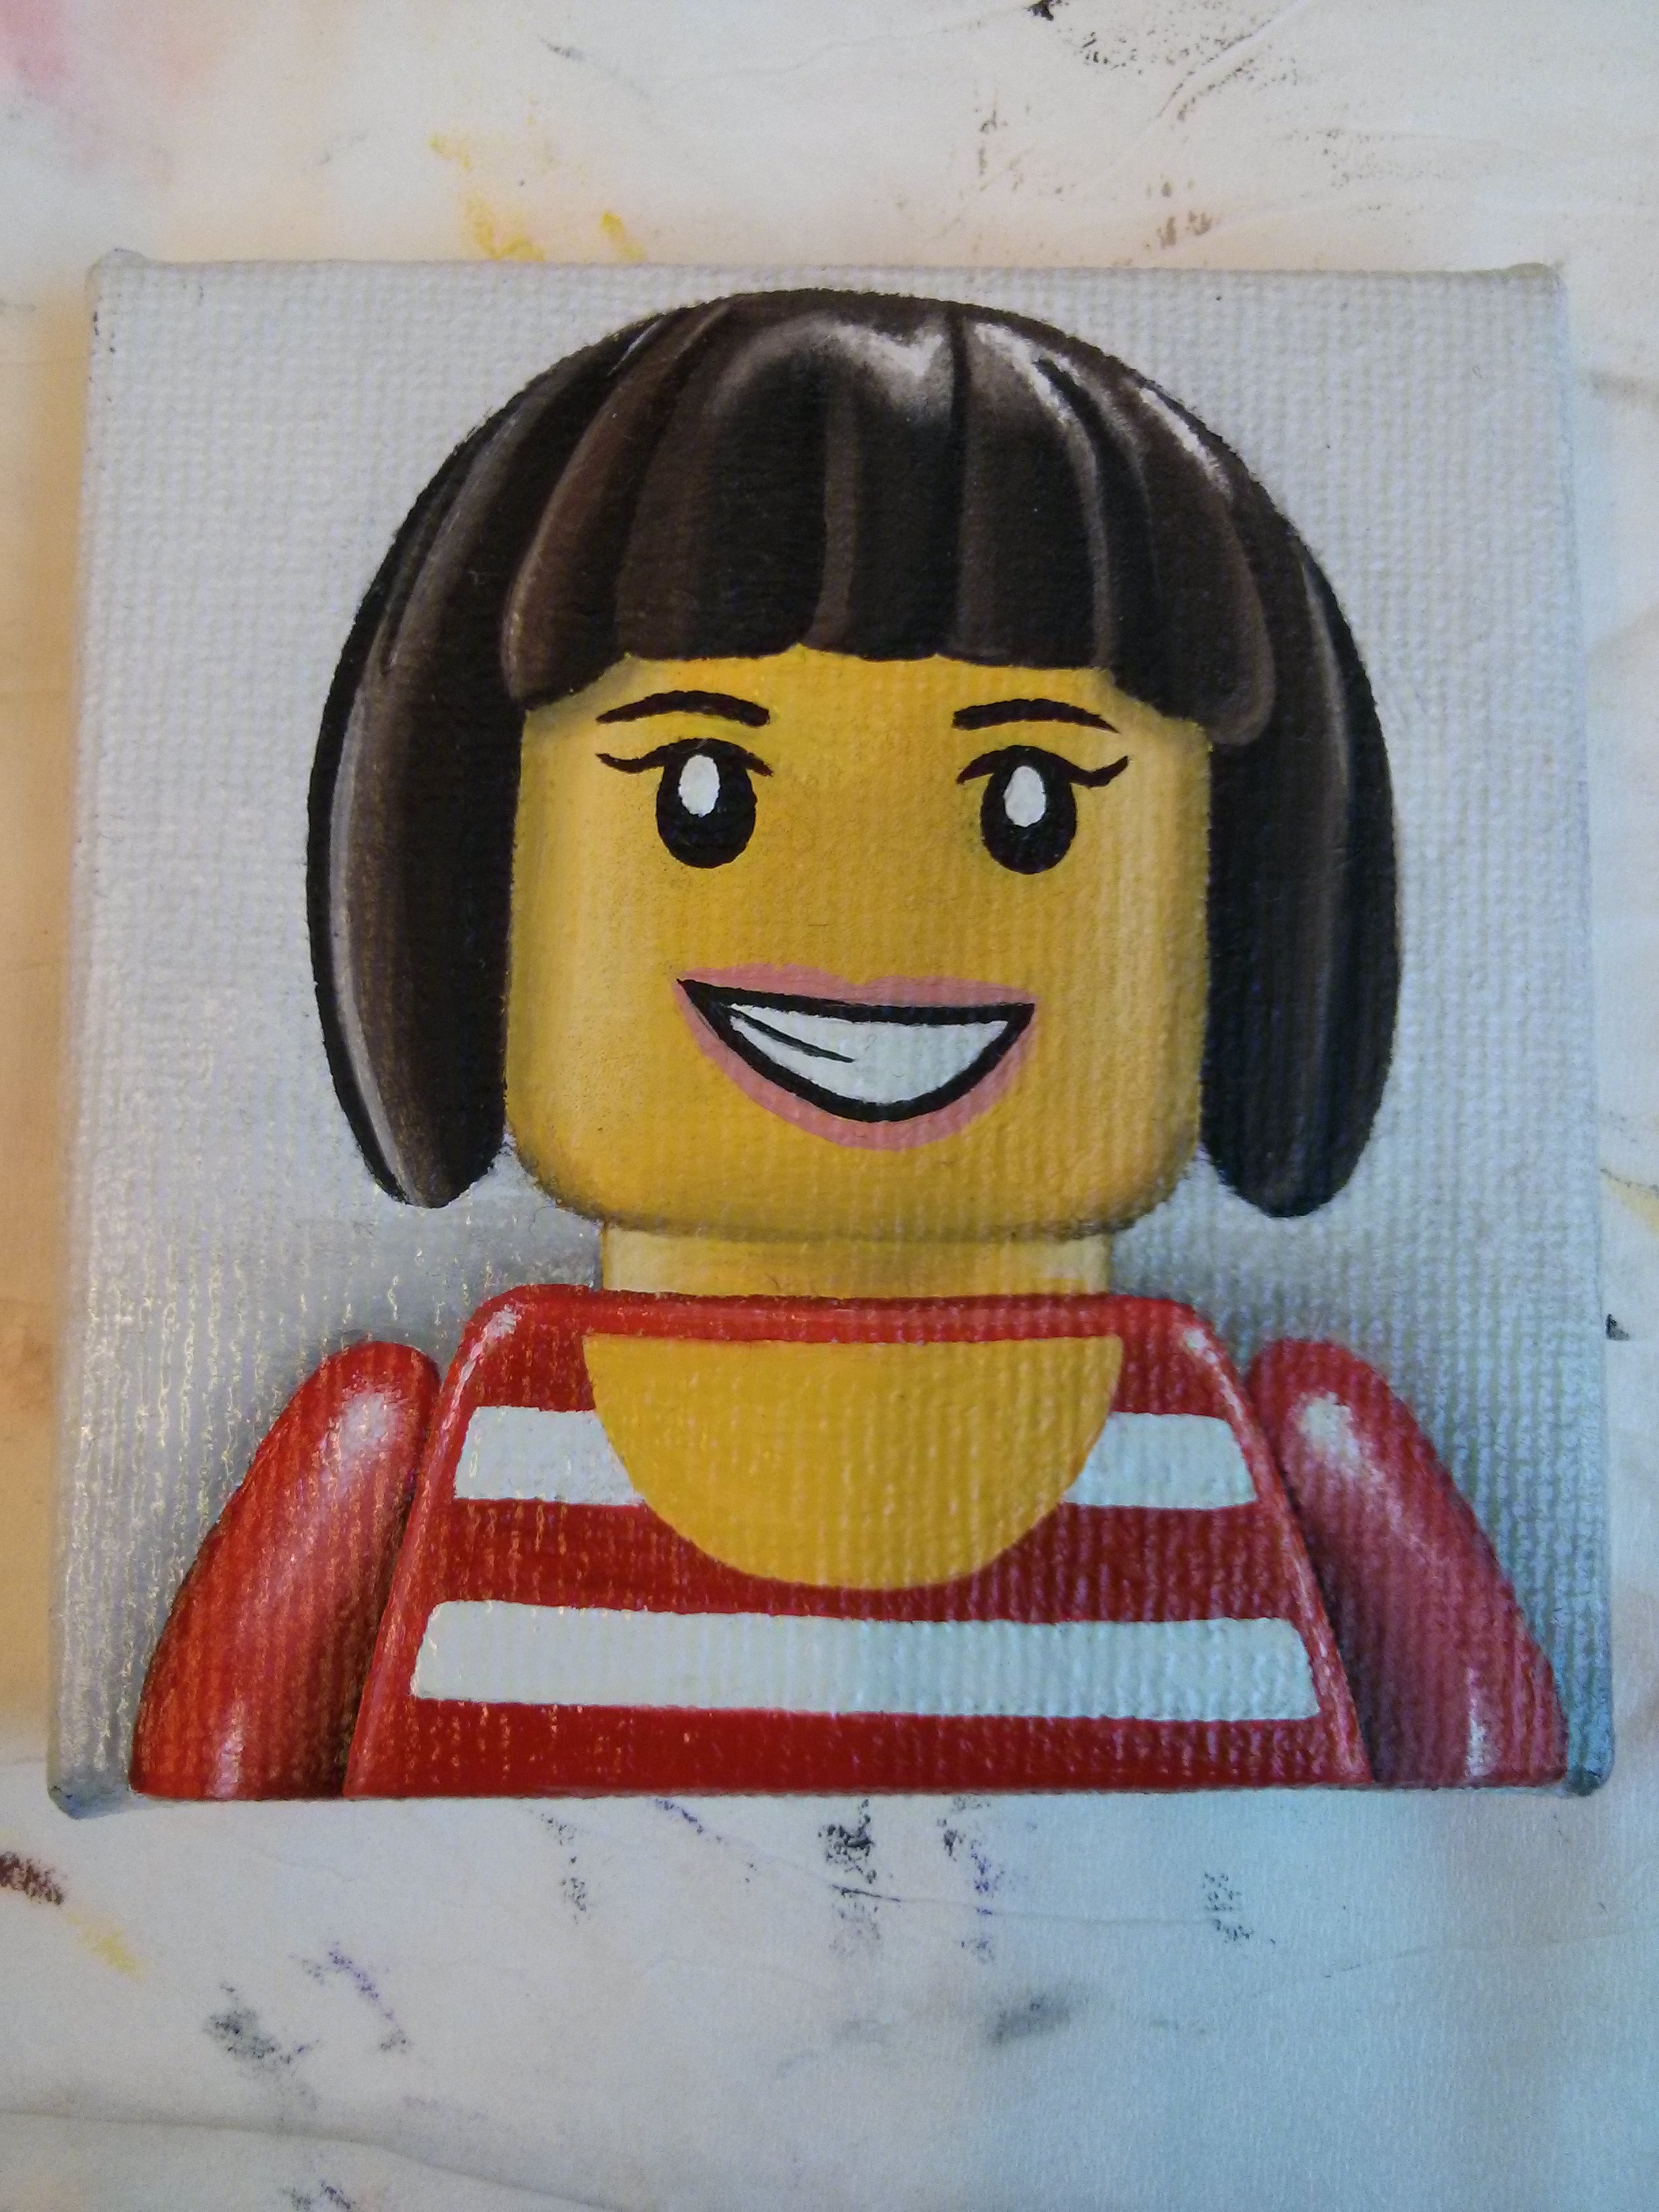 Lego Dom